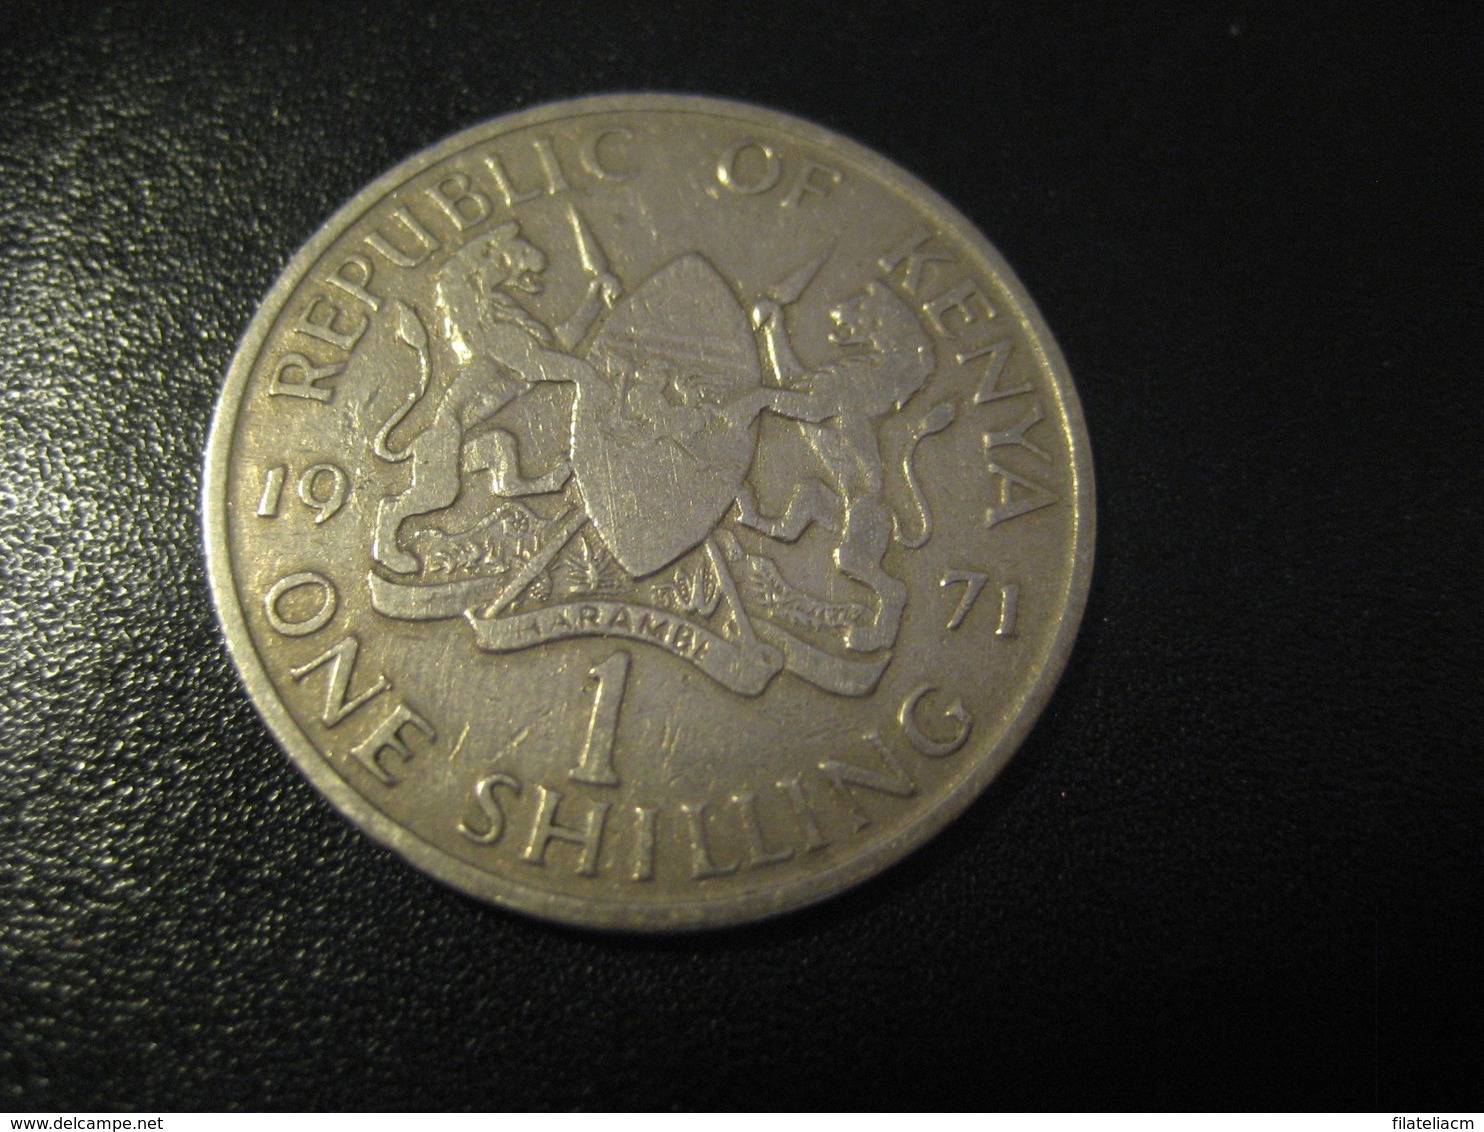 1 One Shilling 1971 KENYA Coin - Kenya